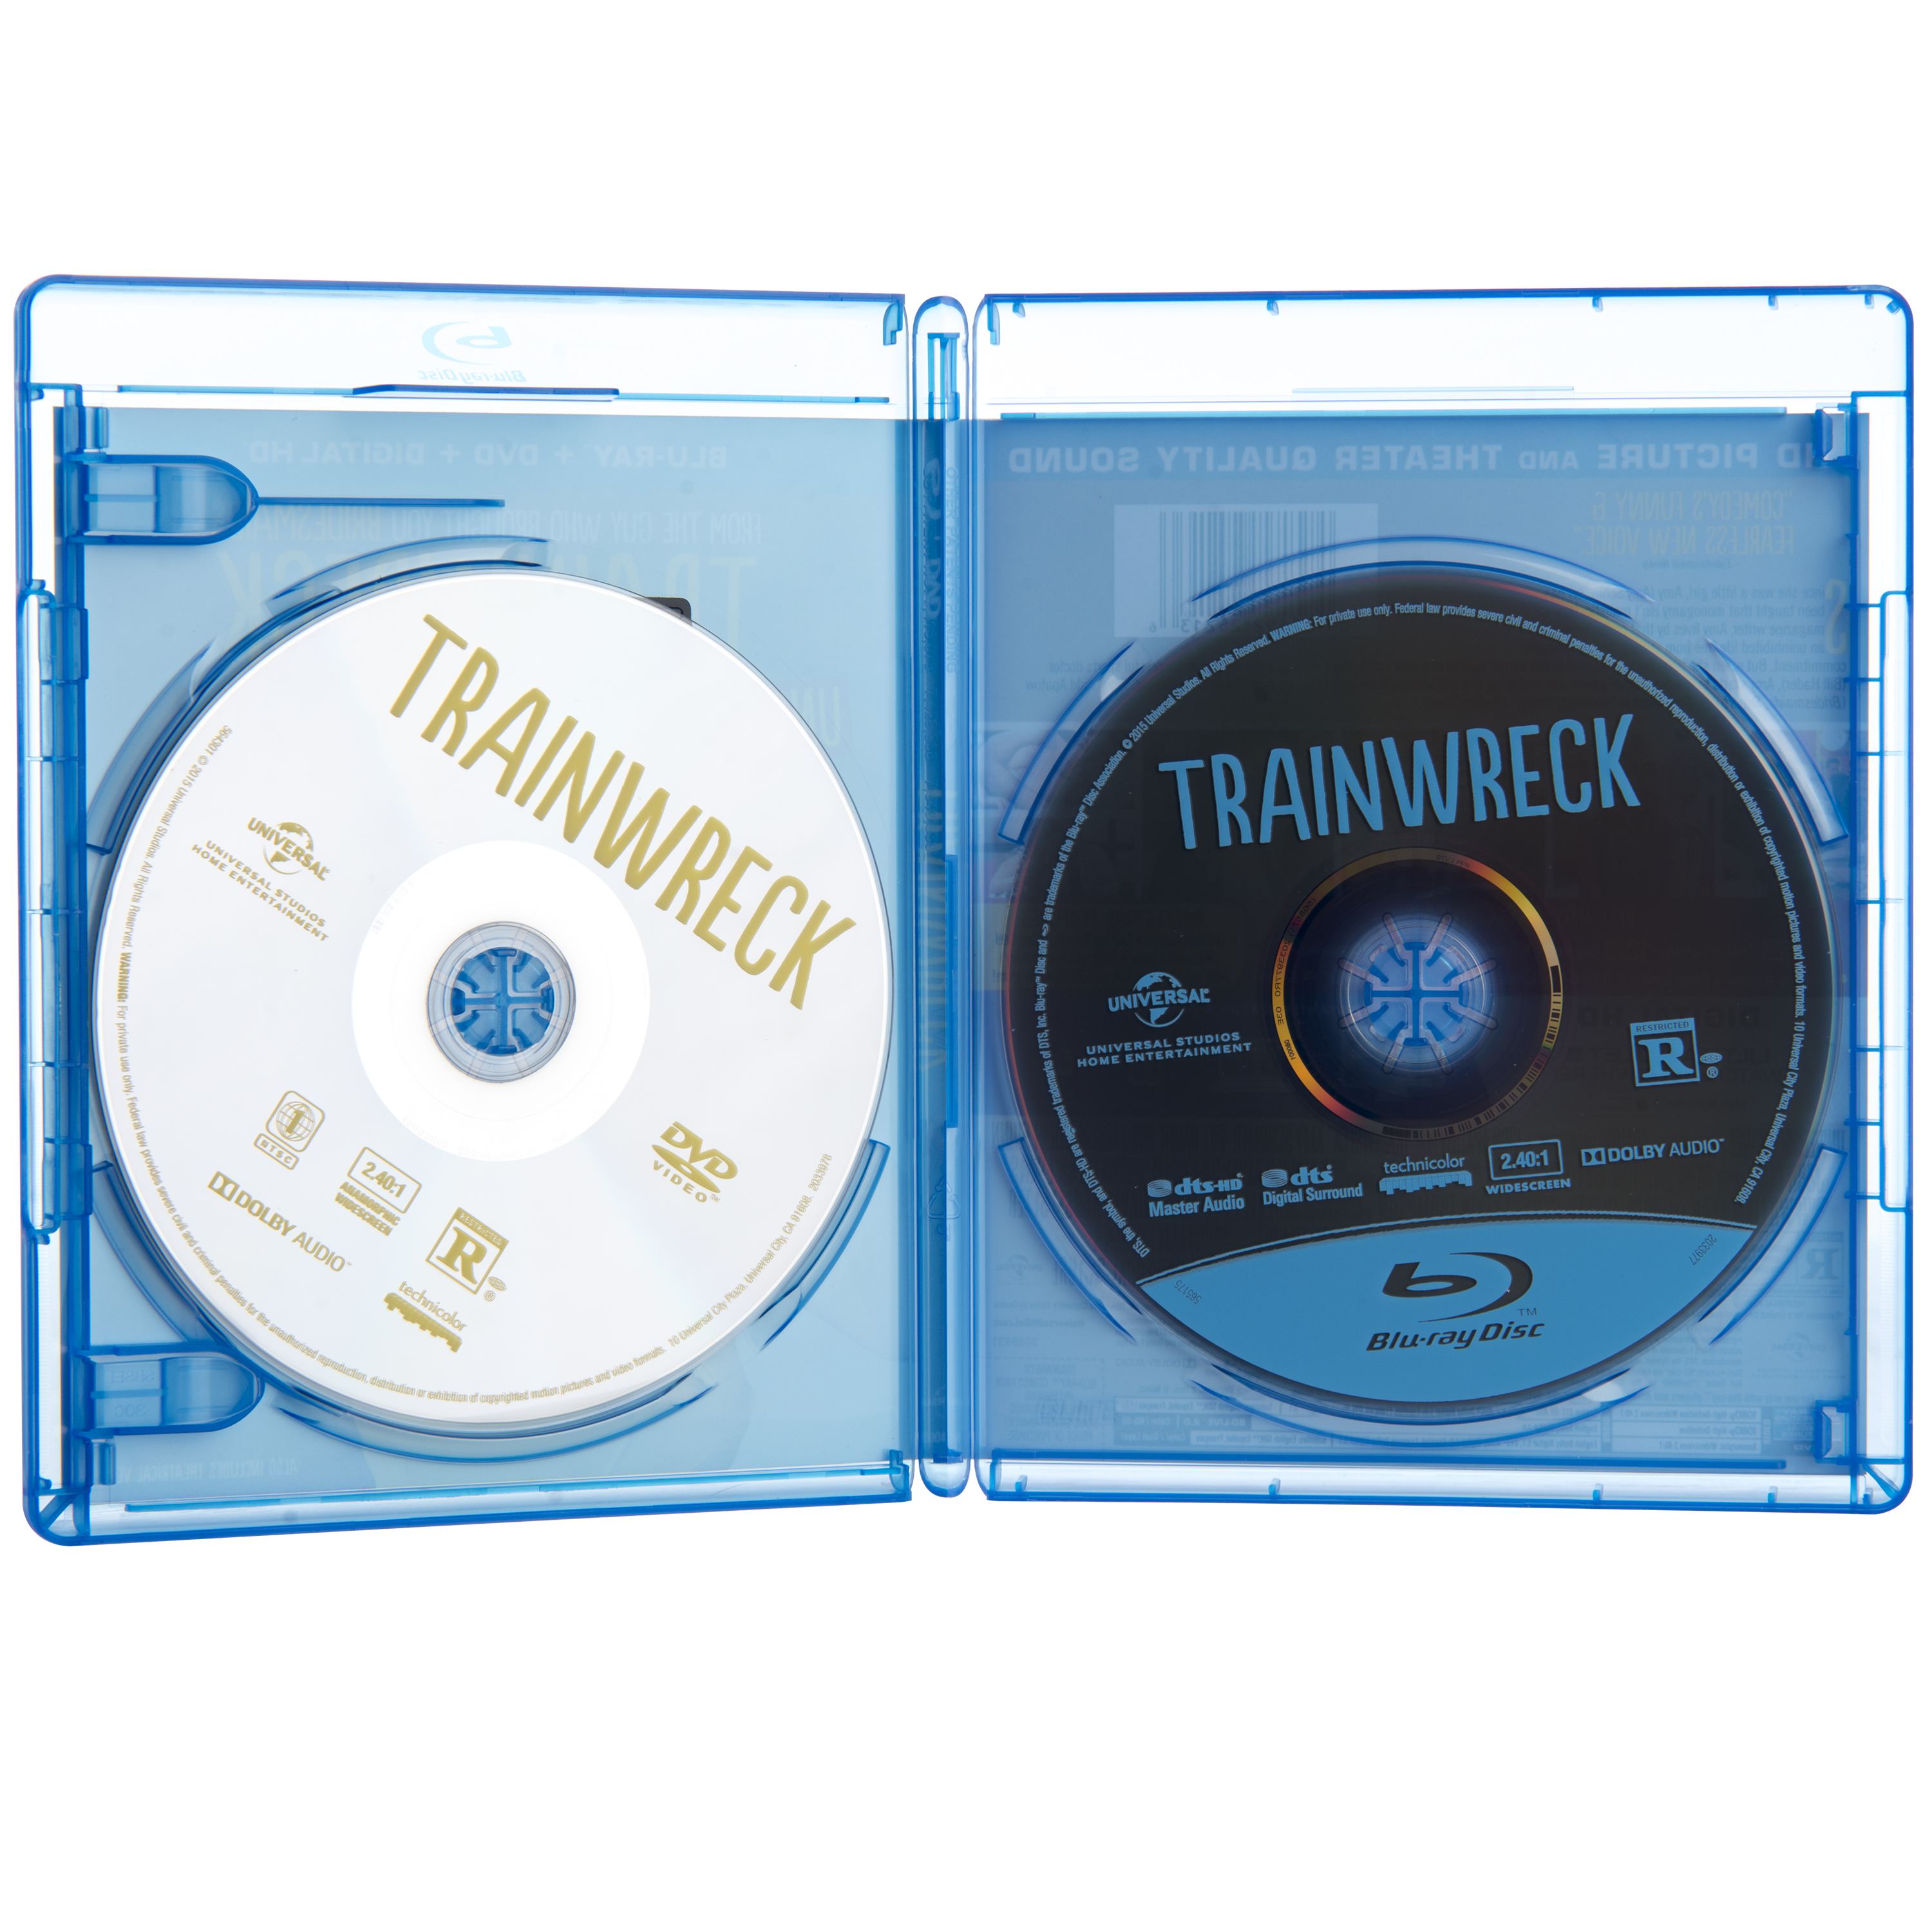 Trainwreck (Blu-ray + DVD) - image 4 of 7